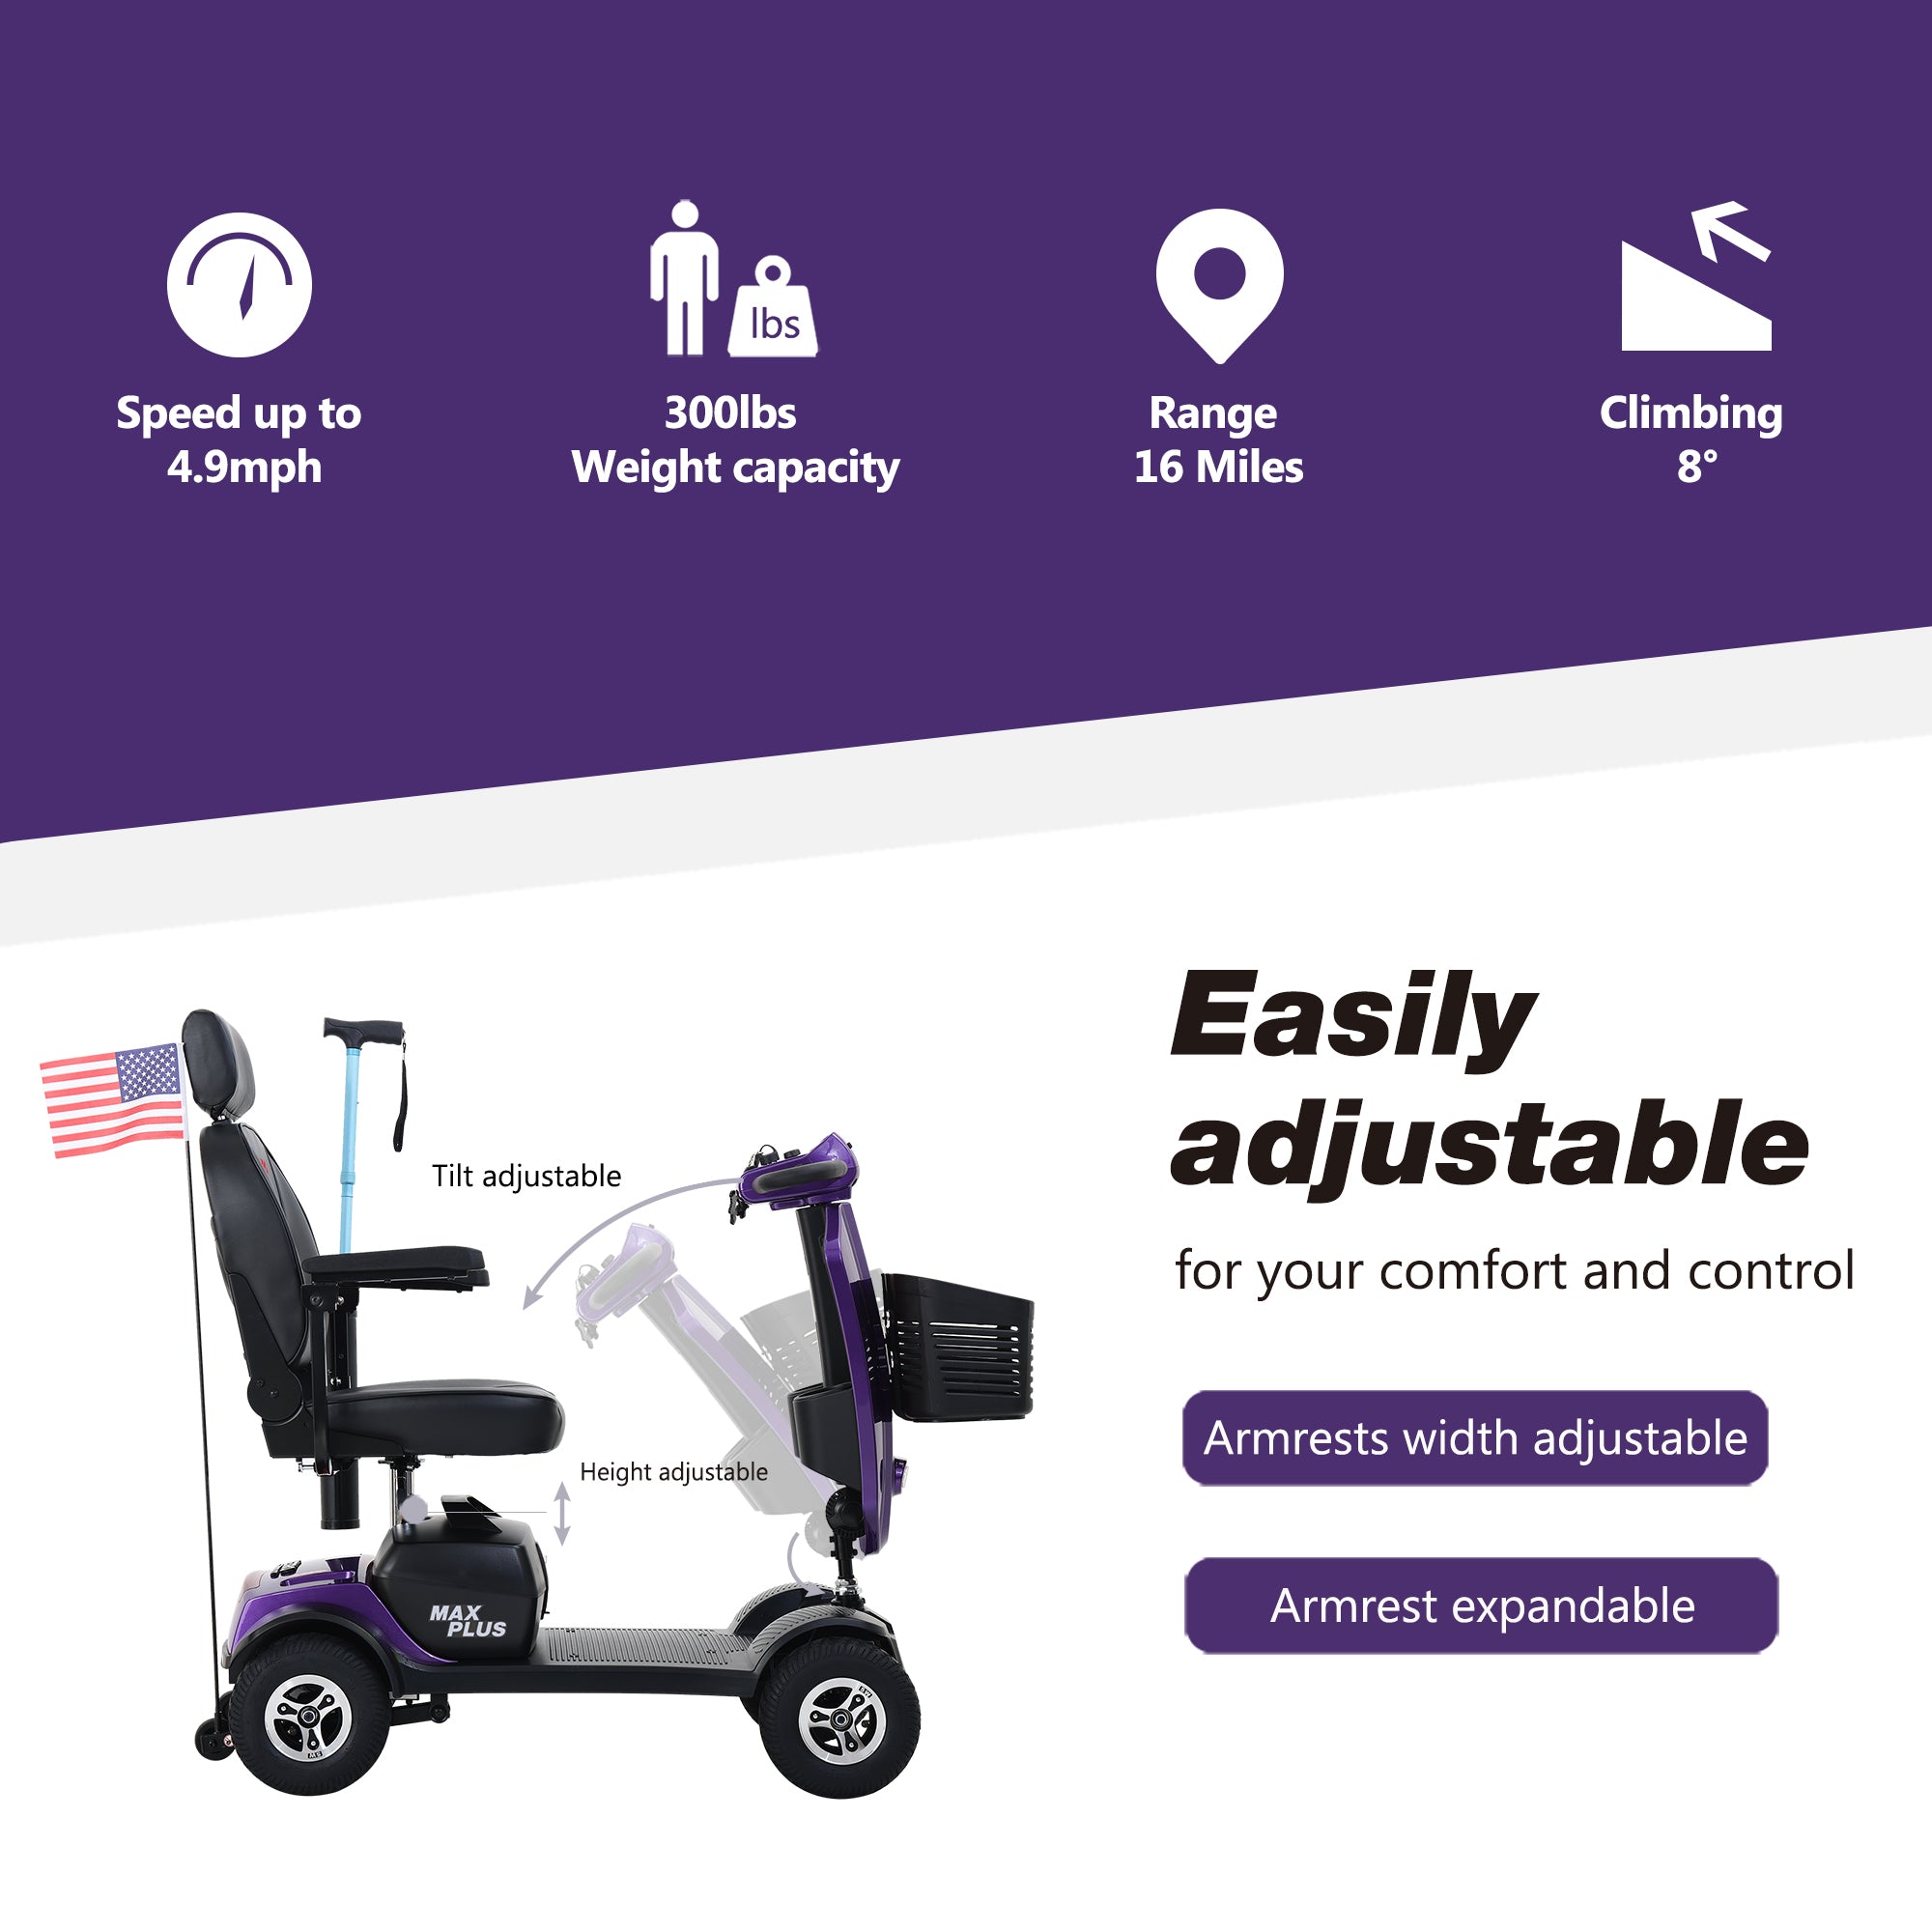 4 Wheels Mobility Scooter for Seniors Adults,LED Lights USB Port Long Range ,Purple